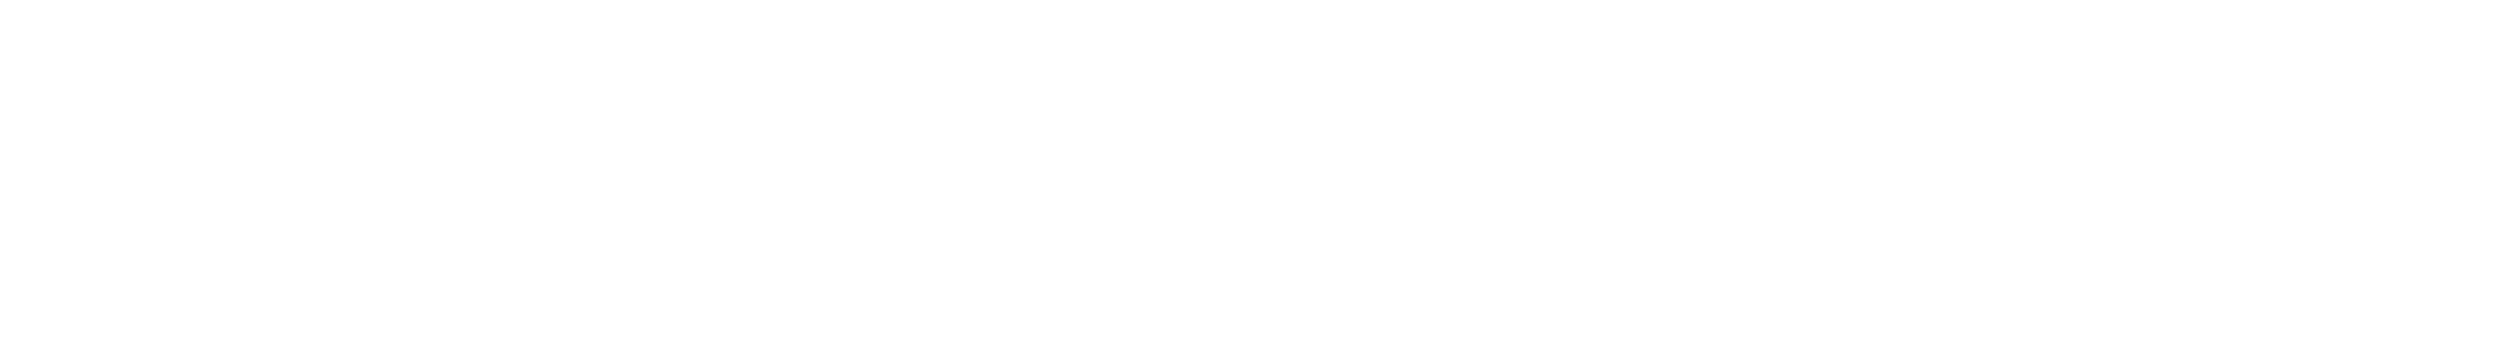 tech crunch.png